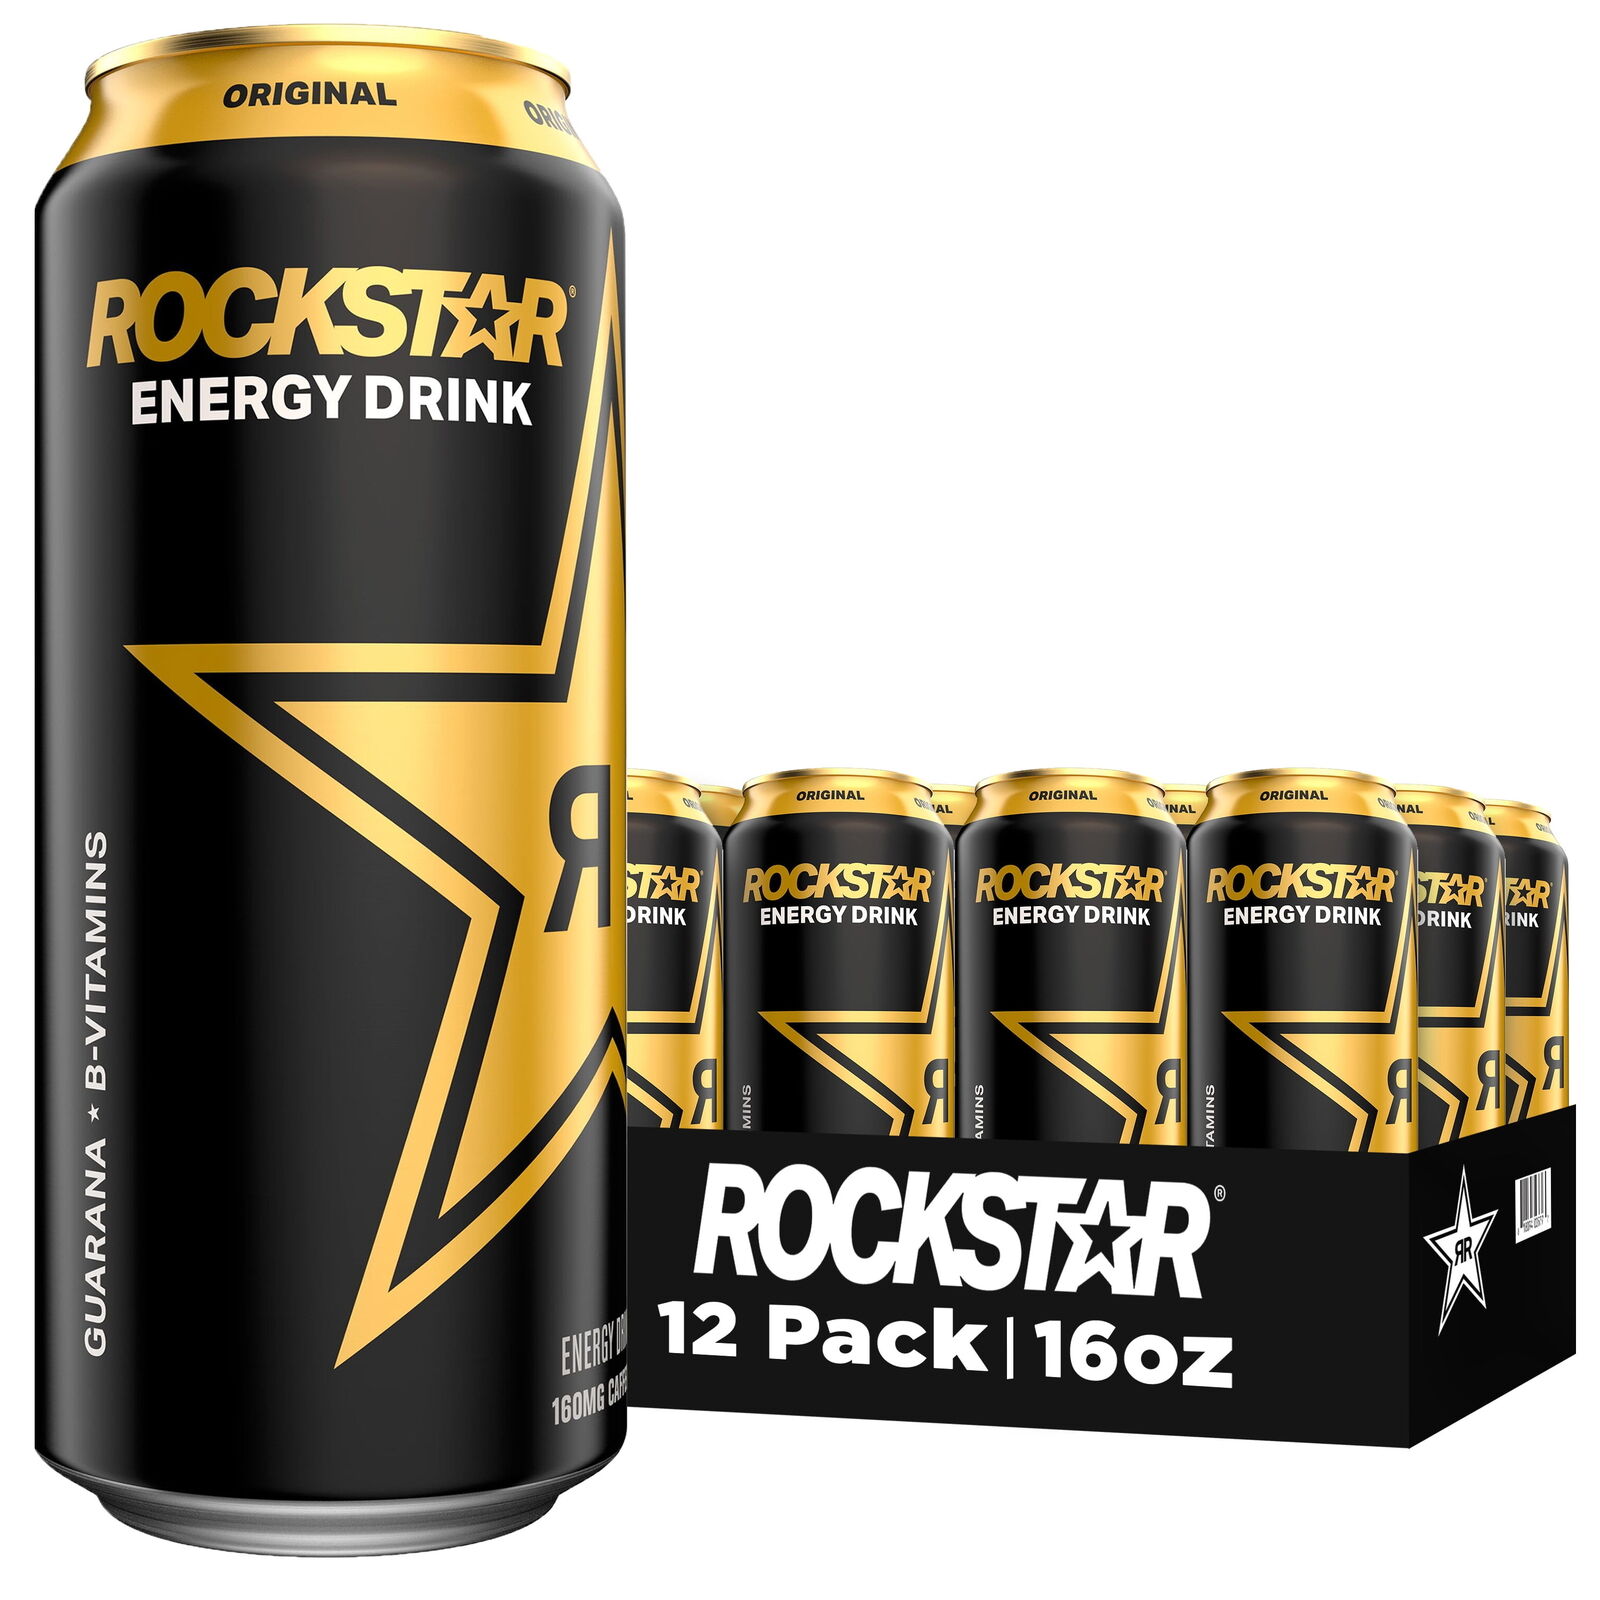 Rockstar Original Energy Drink, 16 fl. oz., 12 Pack Cans